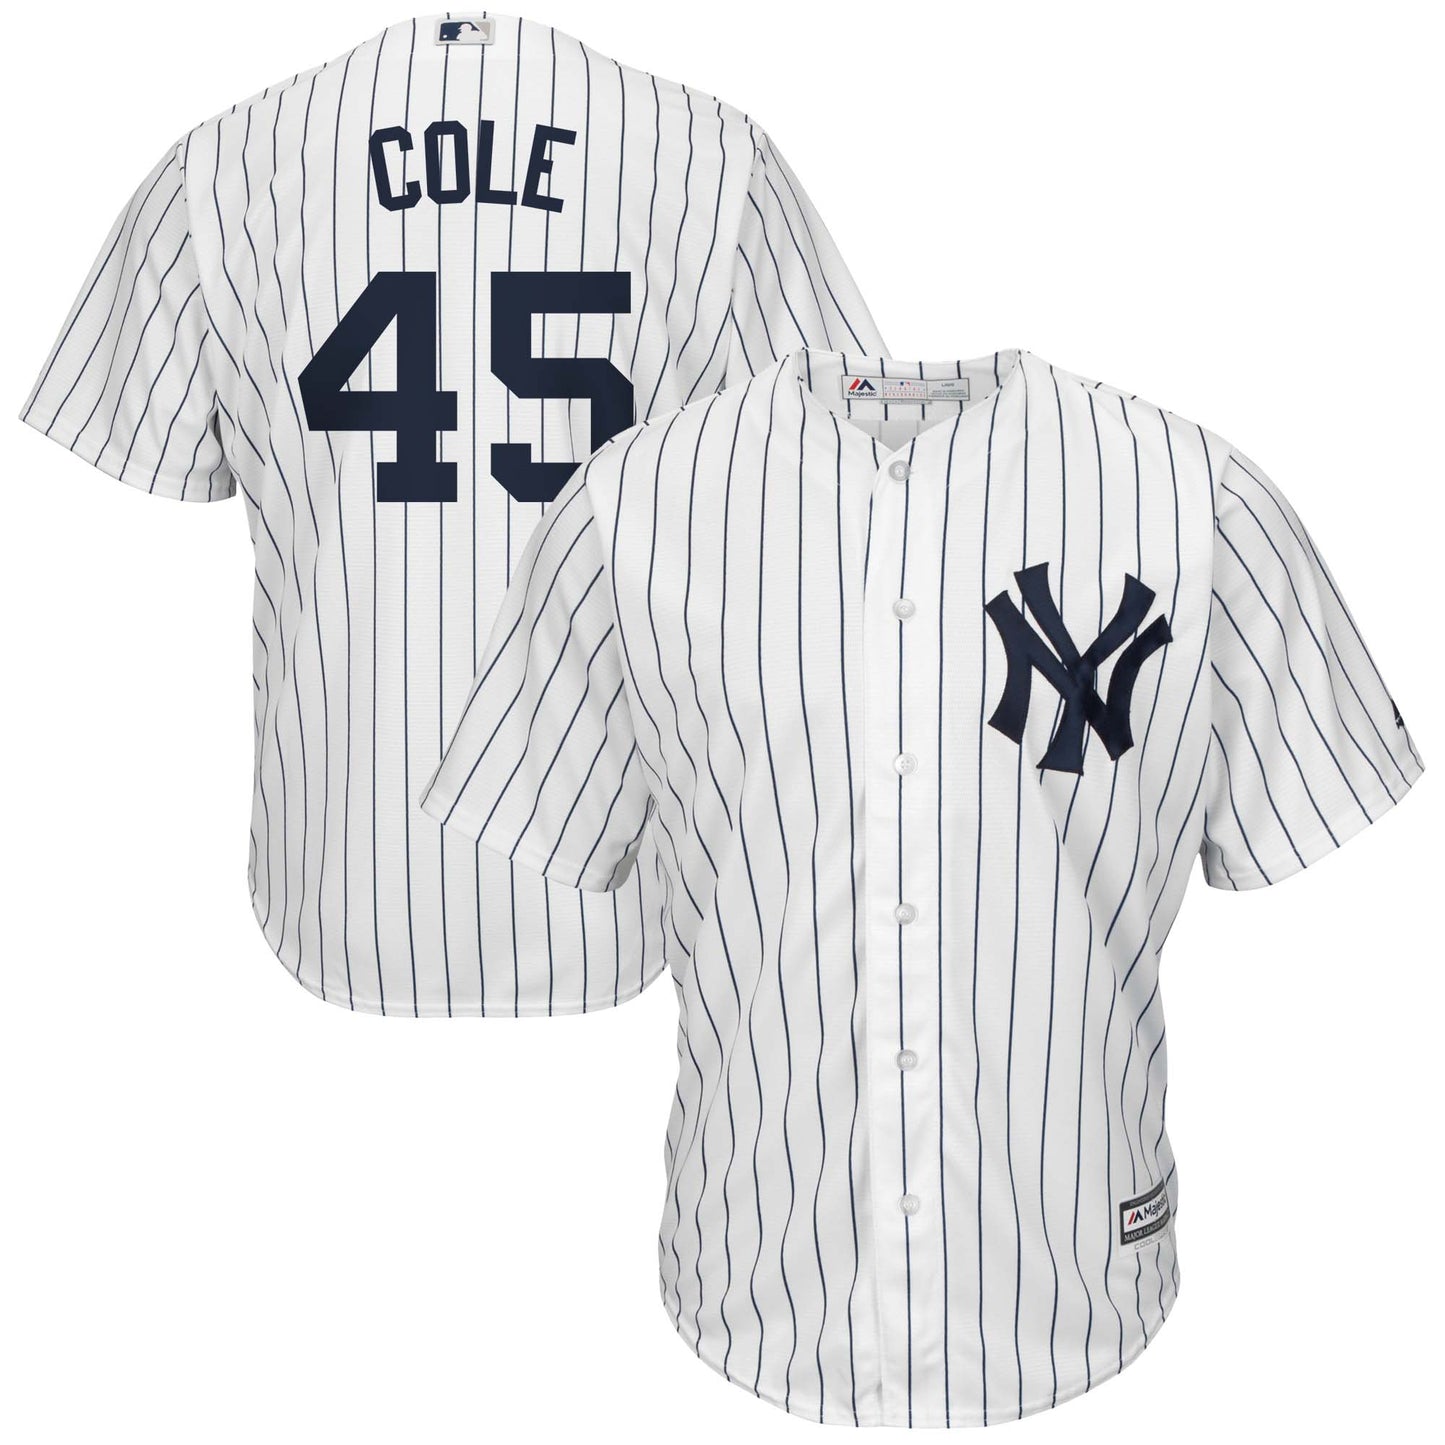 Gerrit Cole New York Yankees Big & Tall Replica Player Jersey - White/Navy